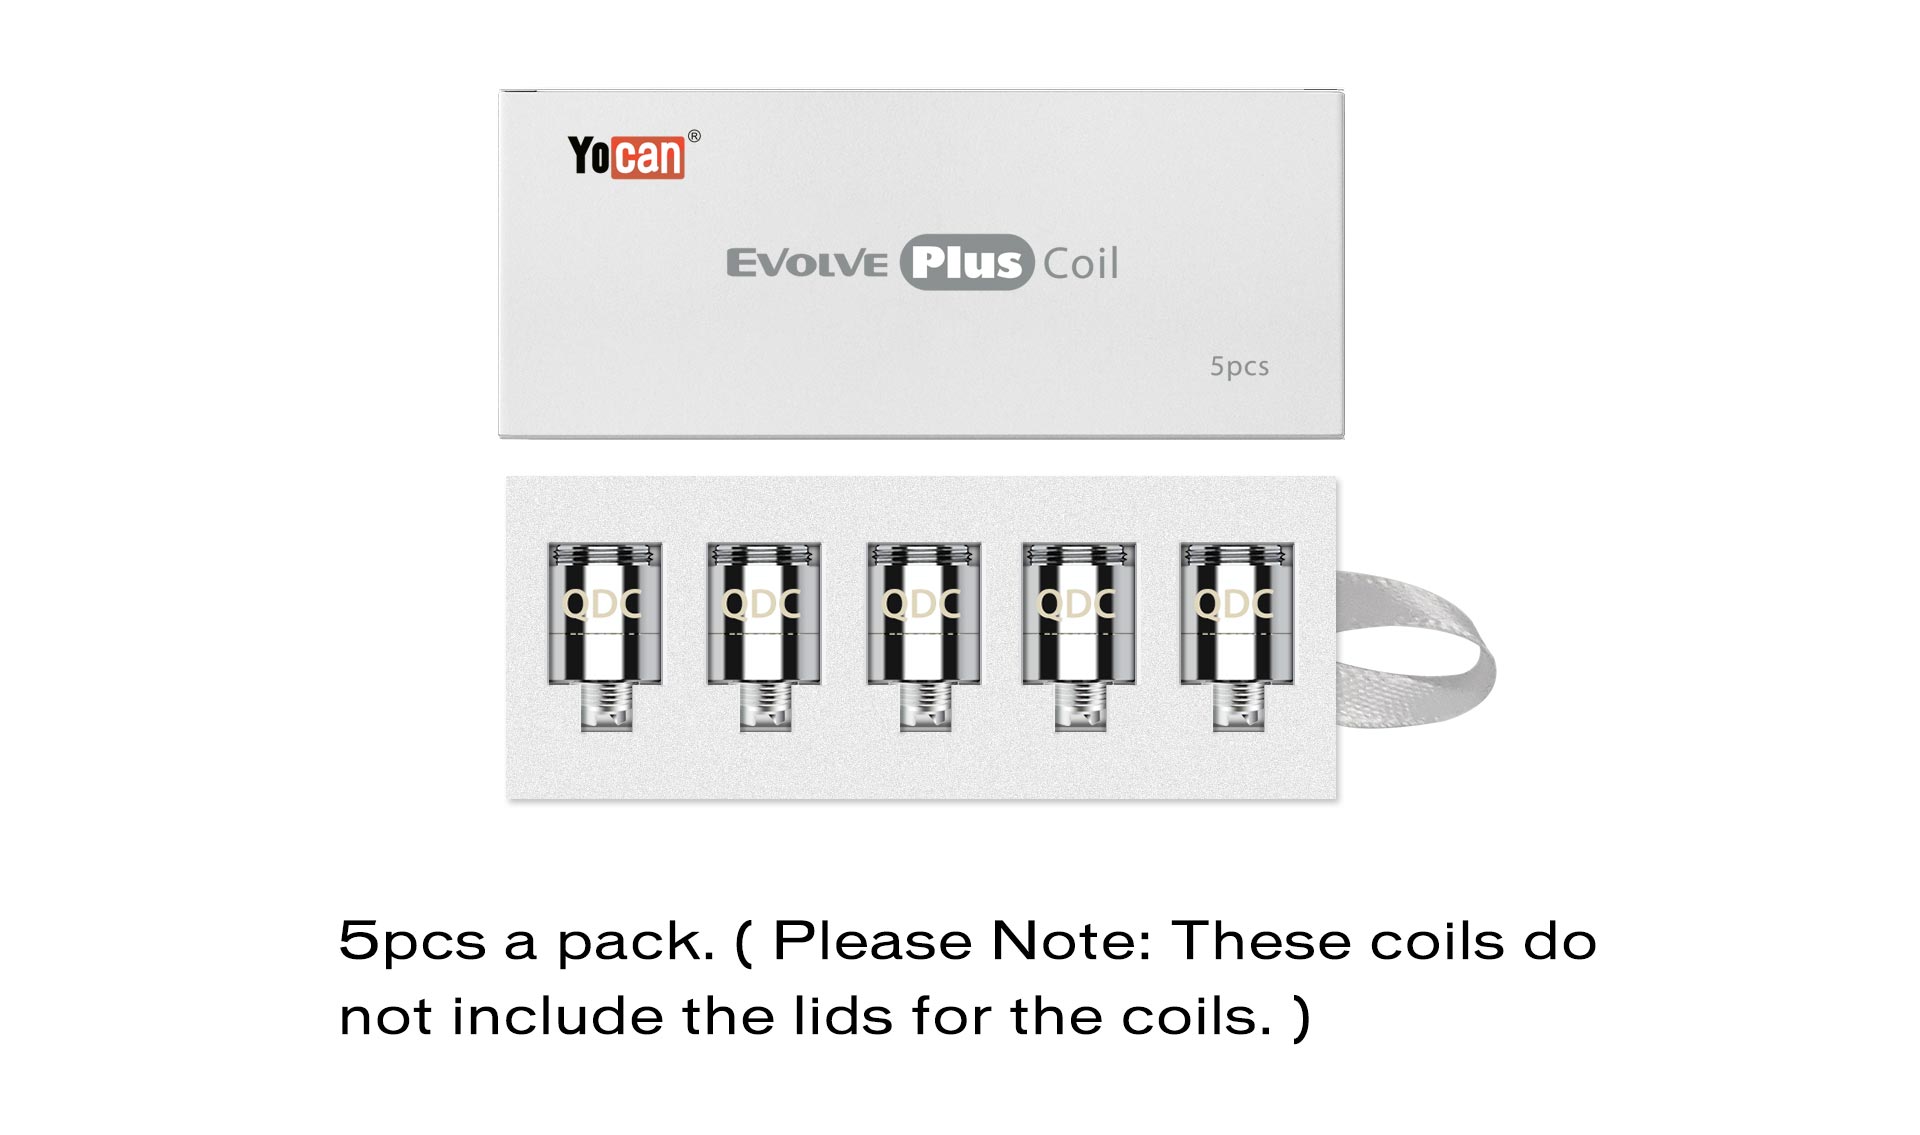 Yocan Evolve-Plus coil - 5 pcs - 2020 version package box